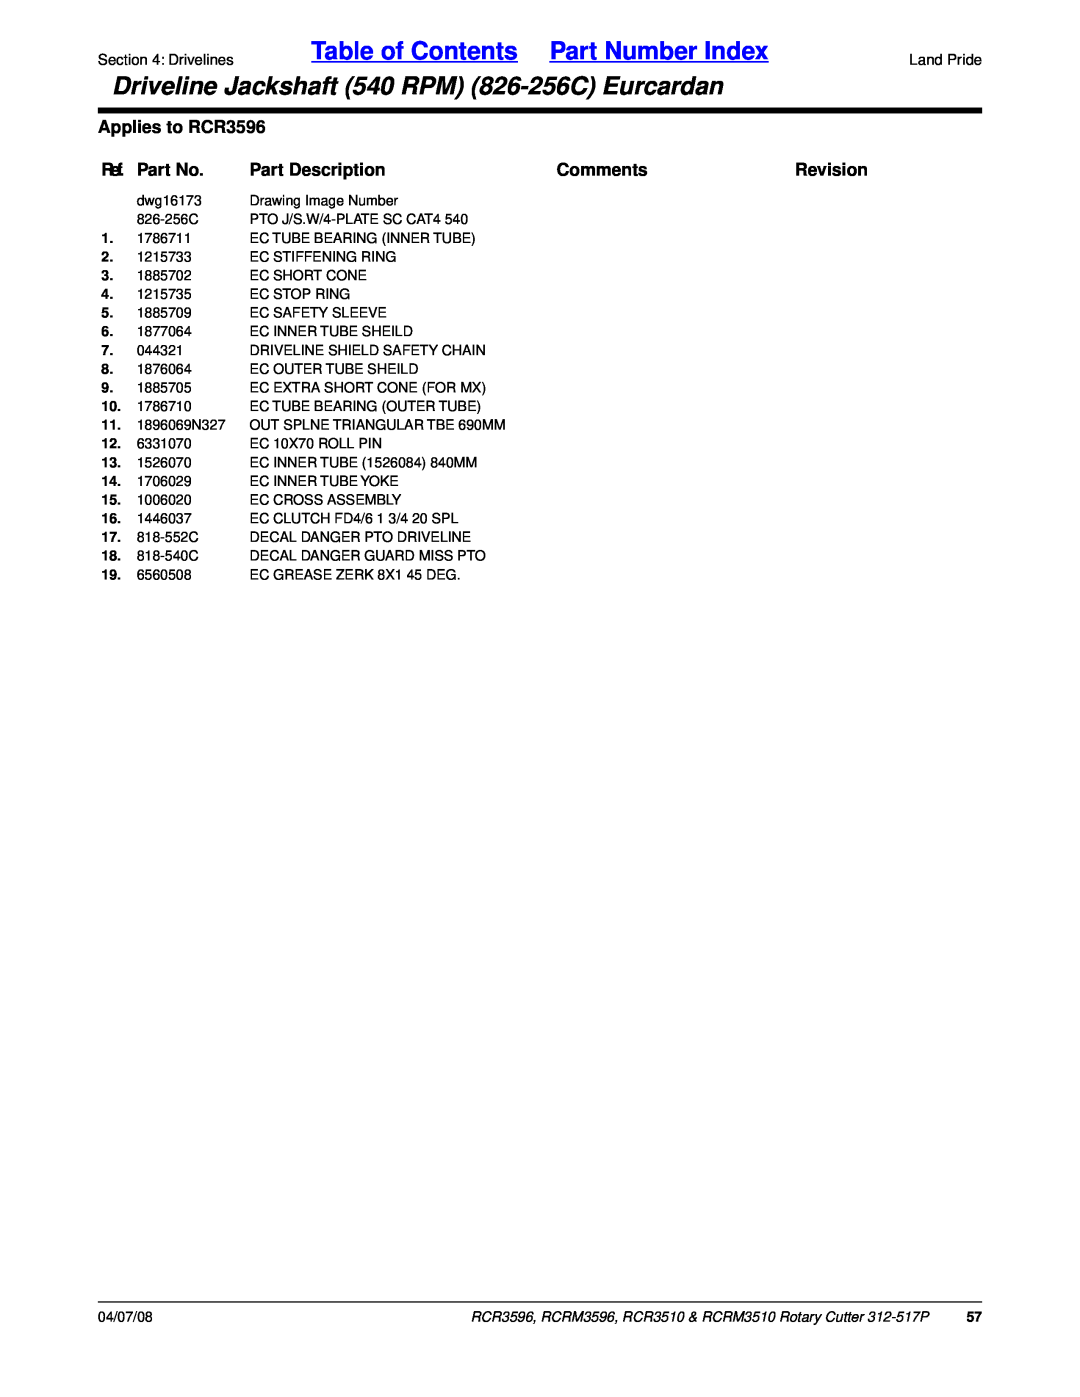 Land Pride RCRM3510 Table of Contents Part Number Index, Driveline Jackshaft 540 RPM 826-256CEurcardan, Applies to RCR3596 